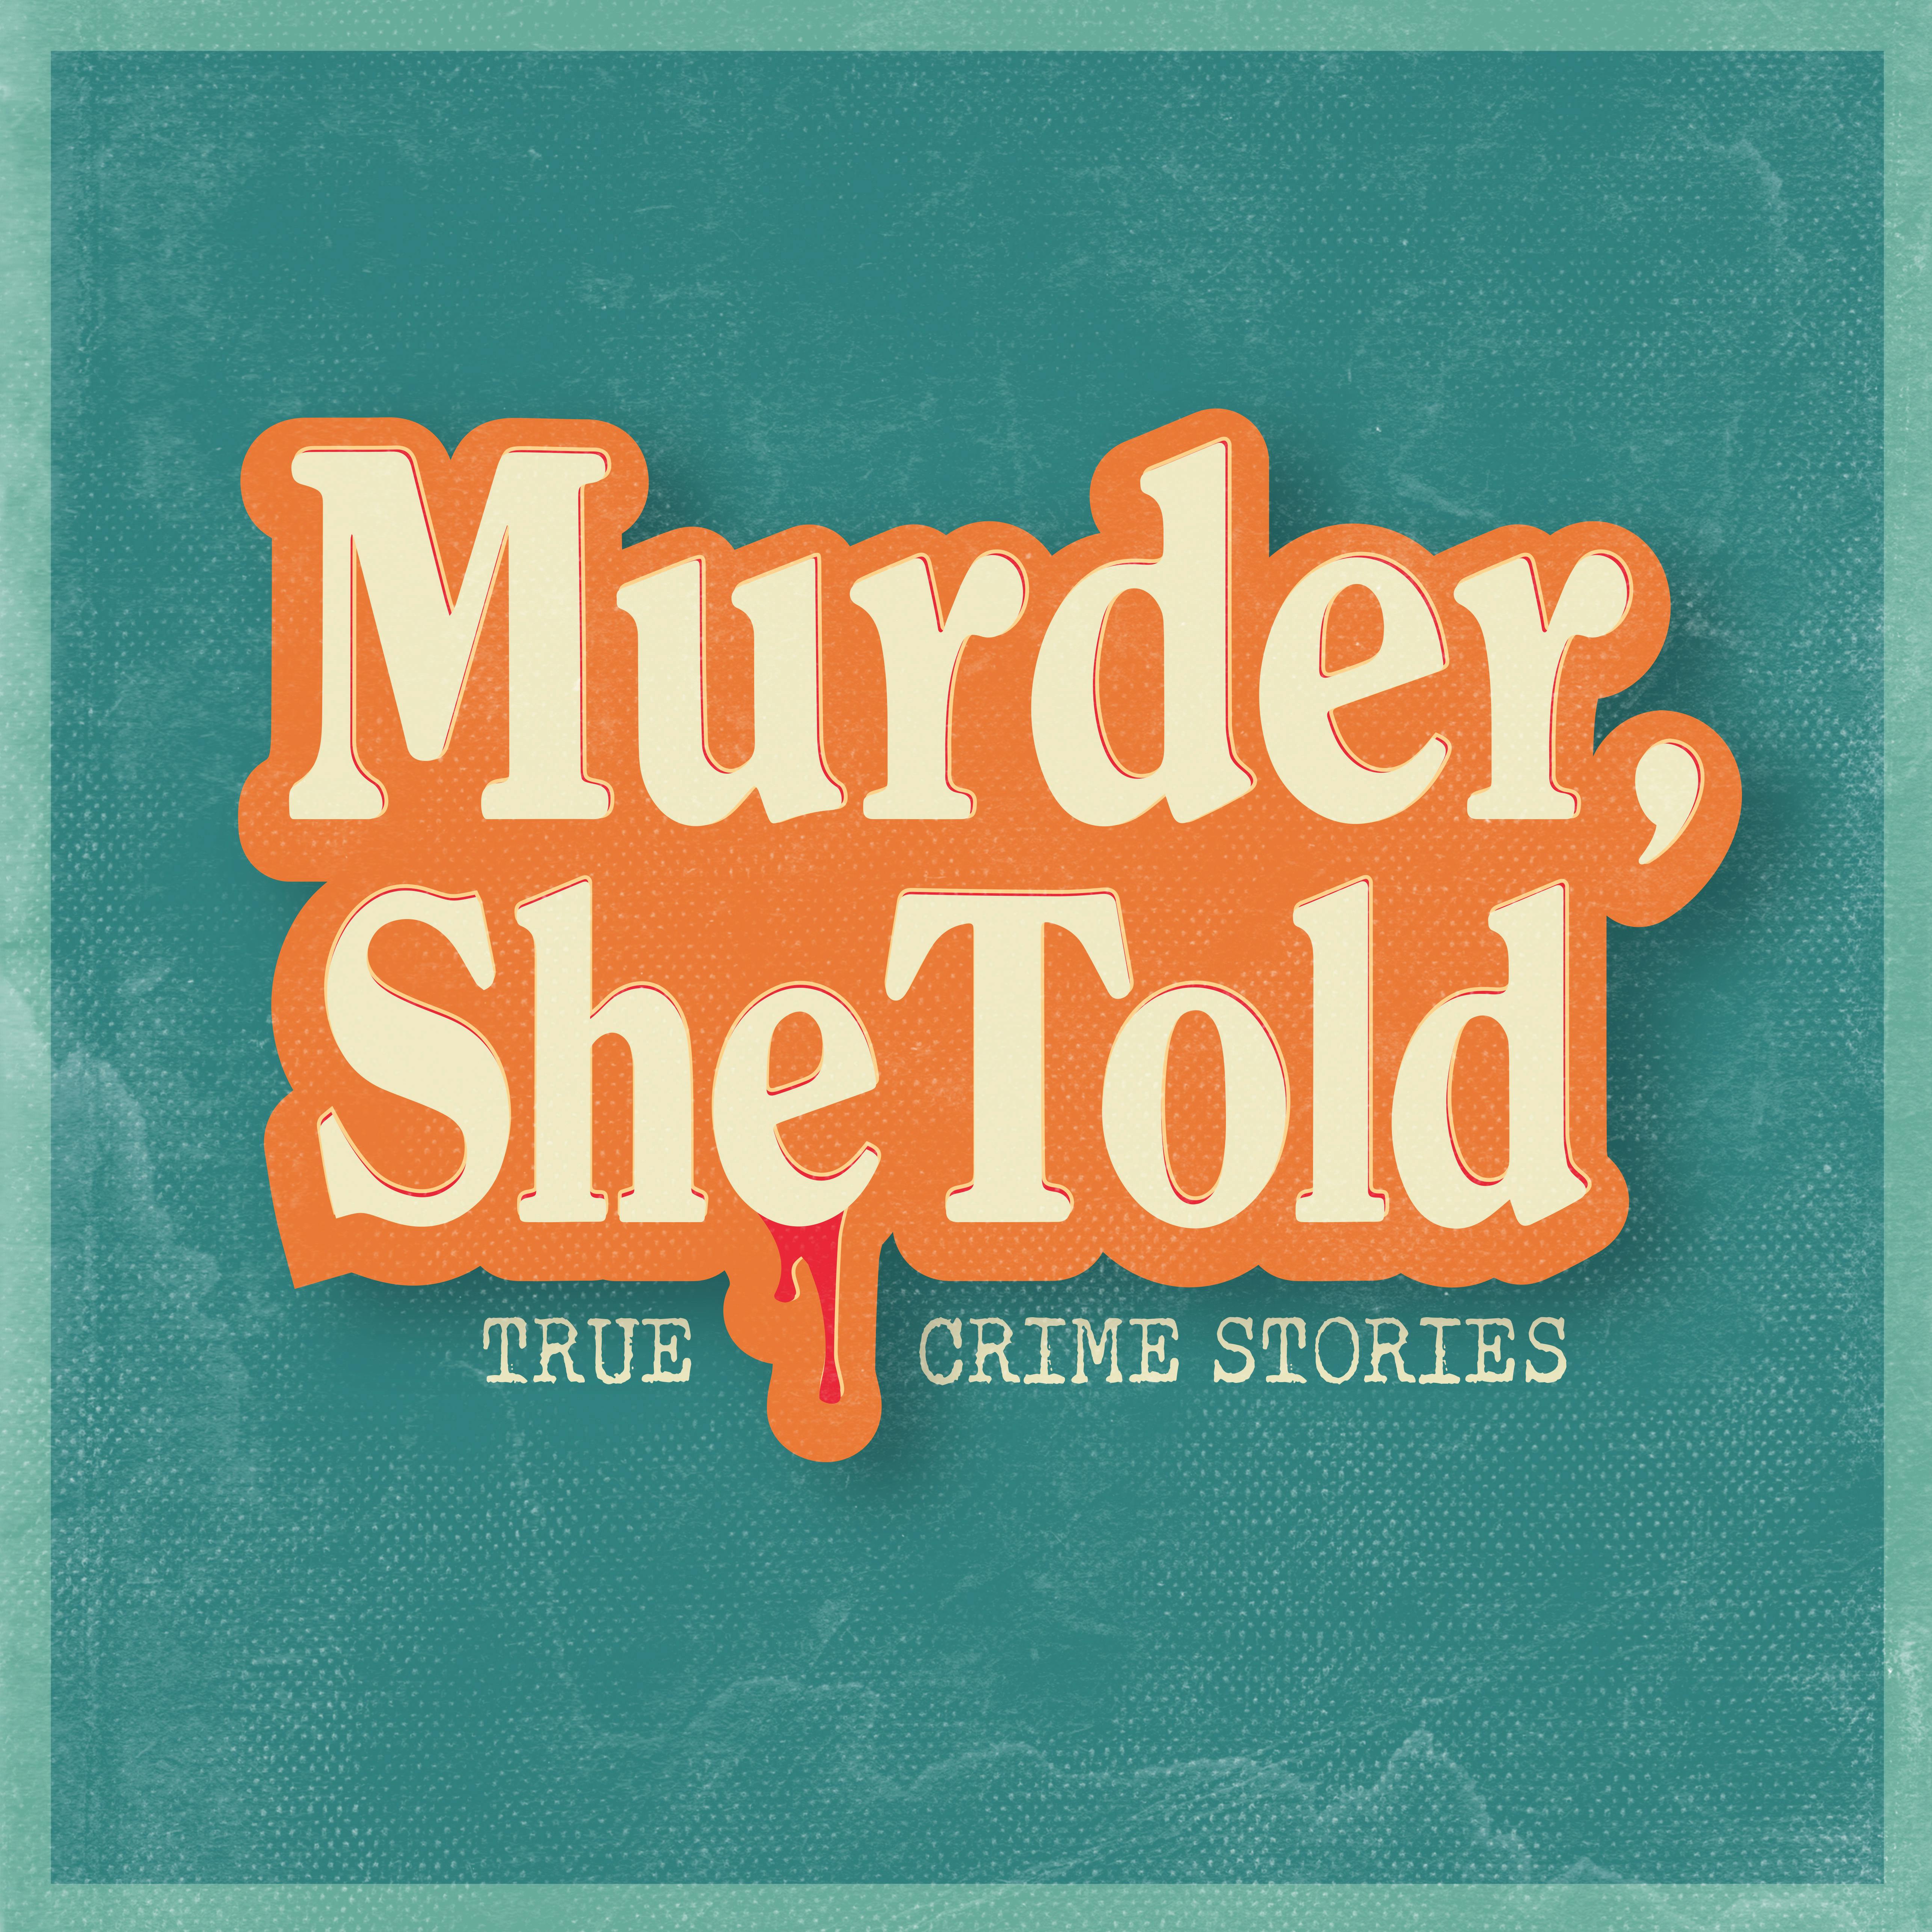 The Murder of Roberta ’Bobbie’ Miller